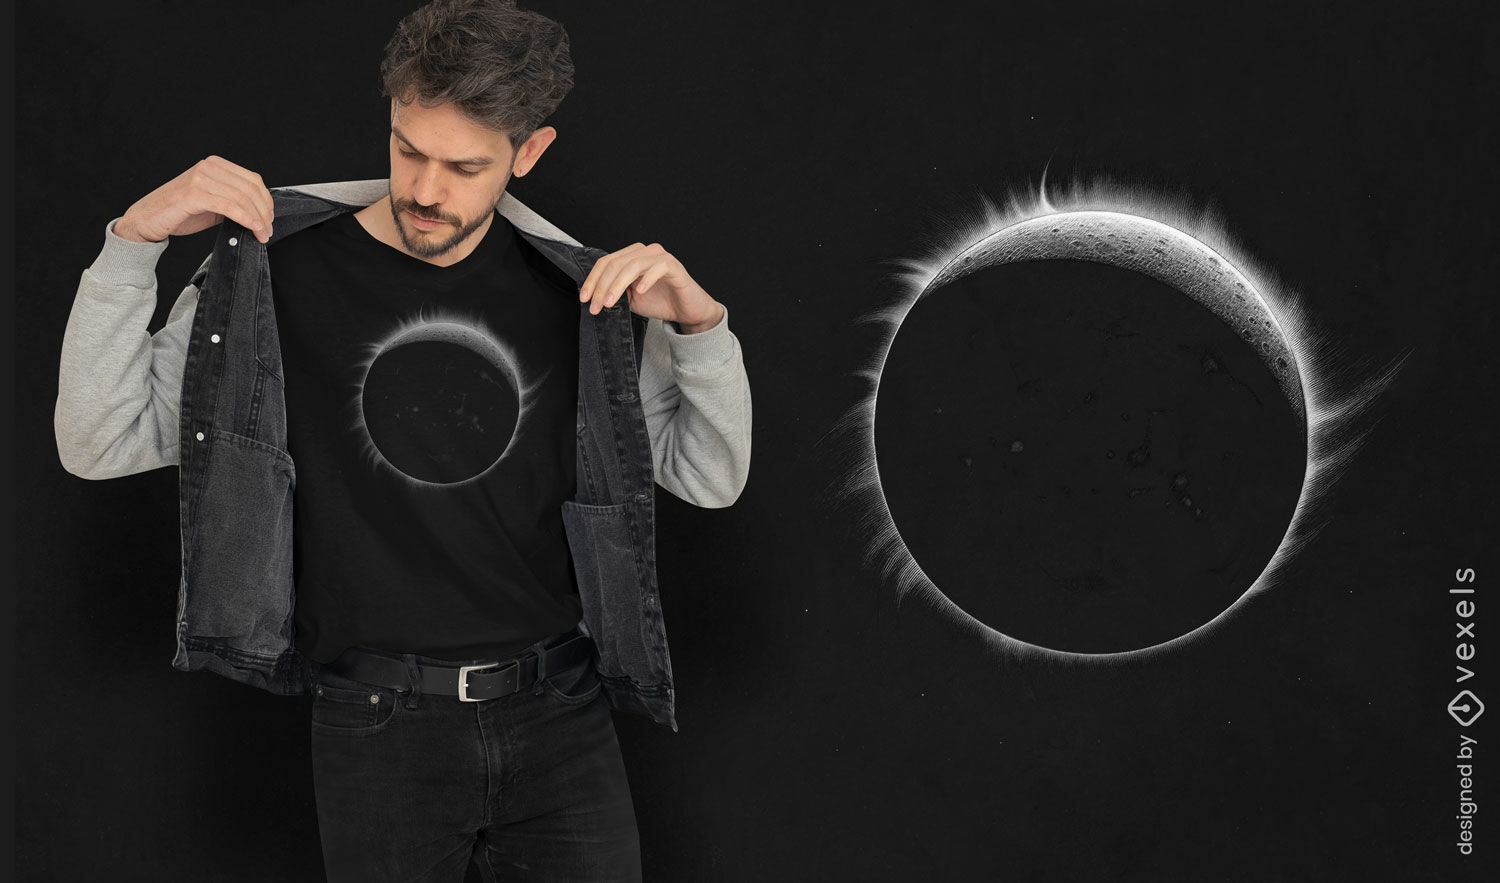 Solar eclipse t-shirt design